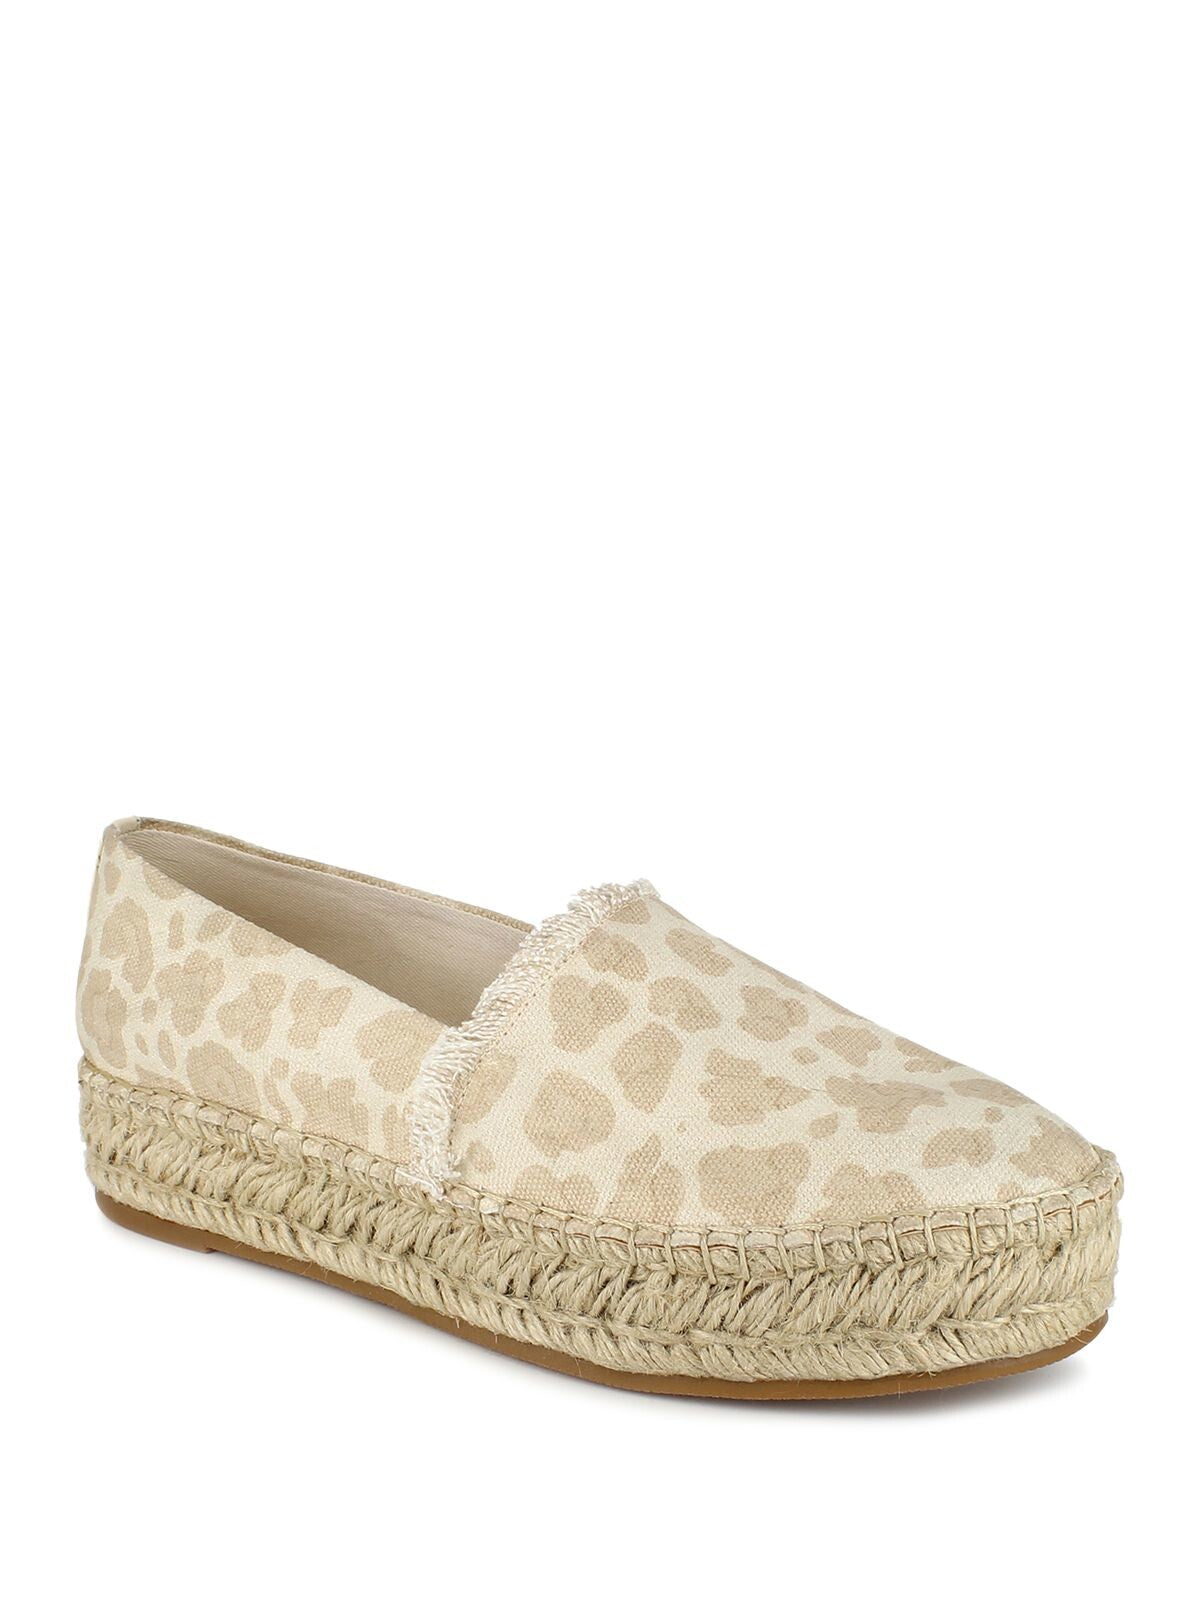 SPLENDID Womens Ivory Animal Print Padded Frayed Lilly Round Toe Platform Slip On Espadrille Shoes 11 M